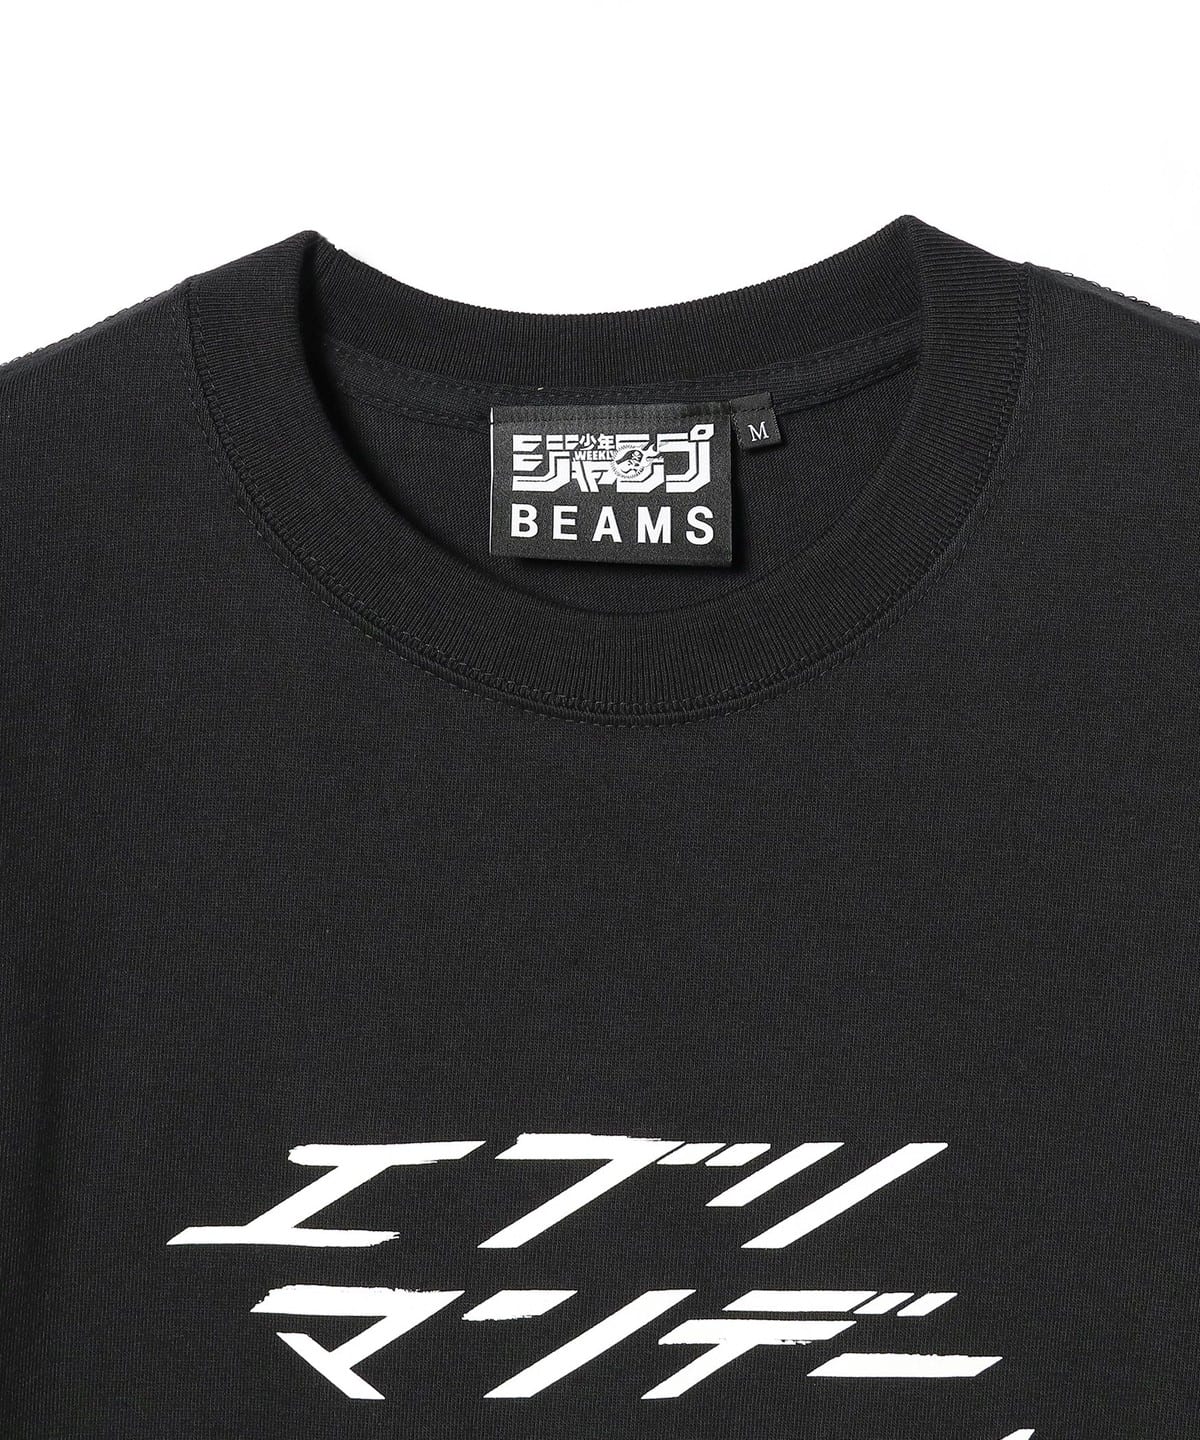 【新品未使用】XL Staple x Futura BLM Tee Tシャツ